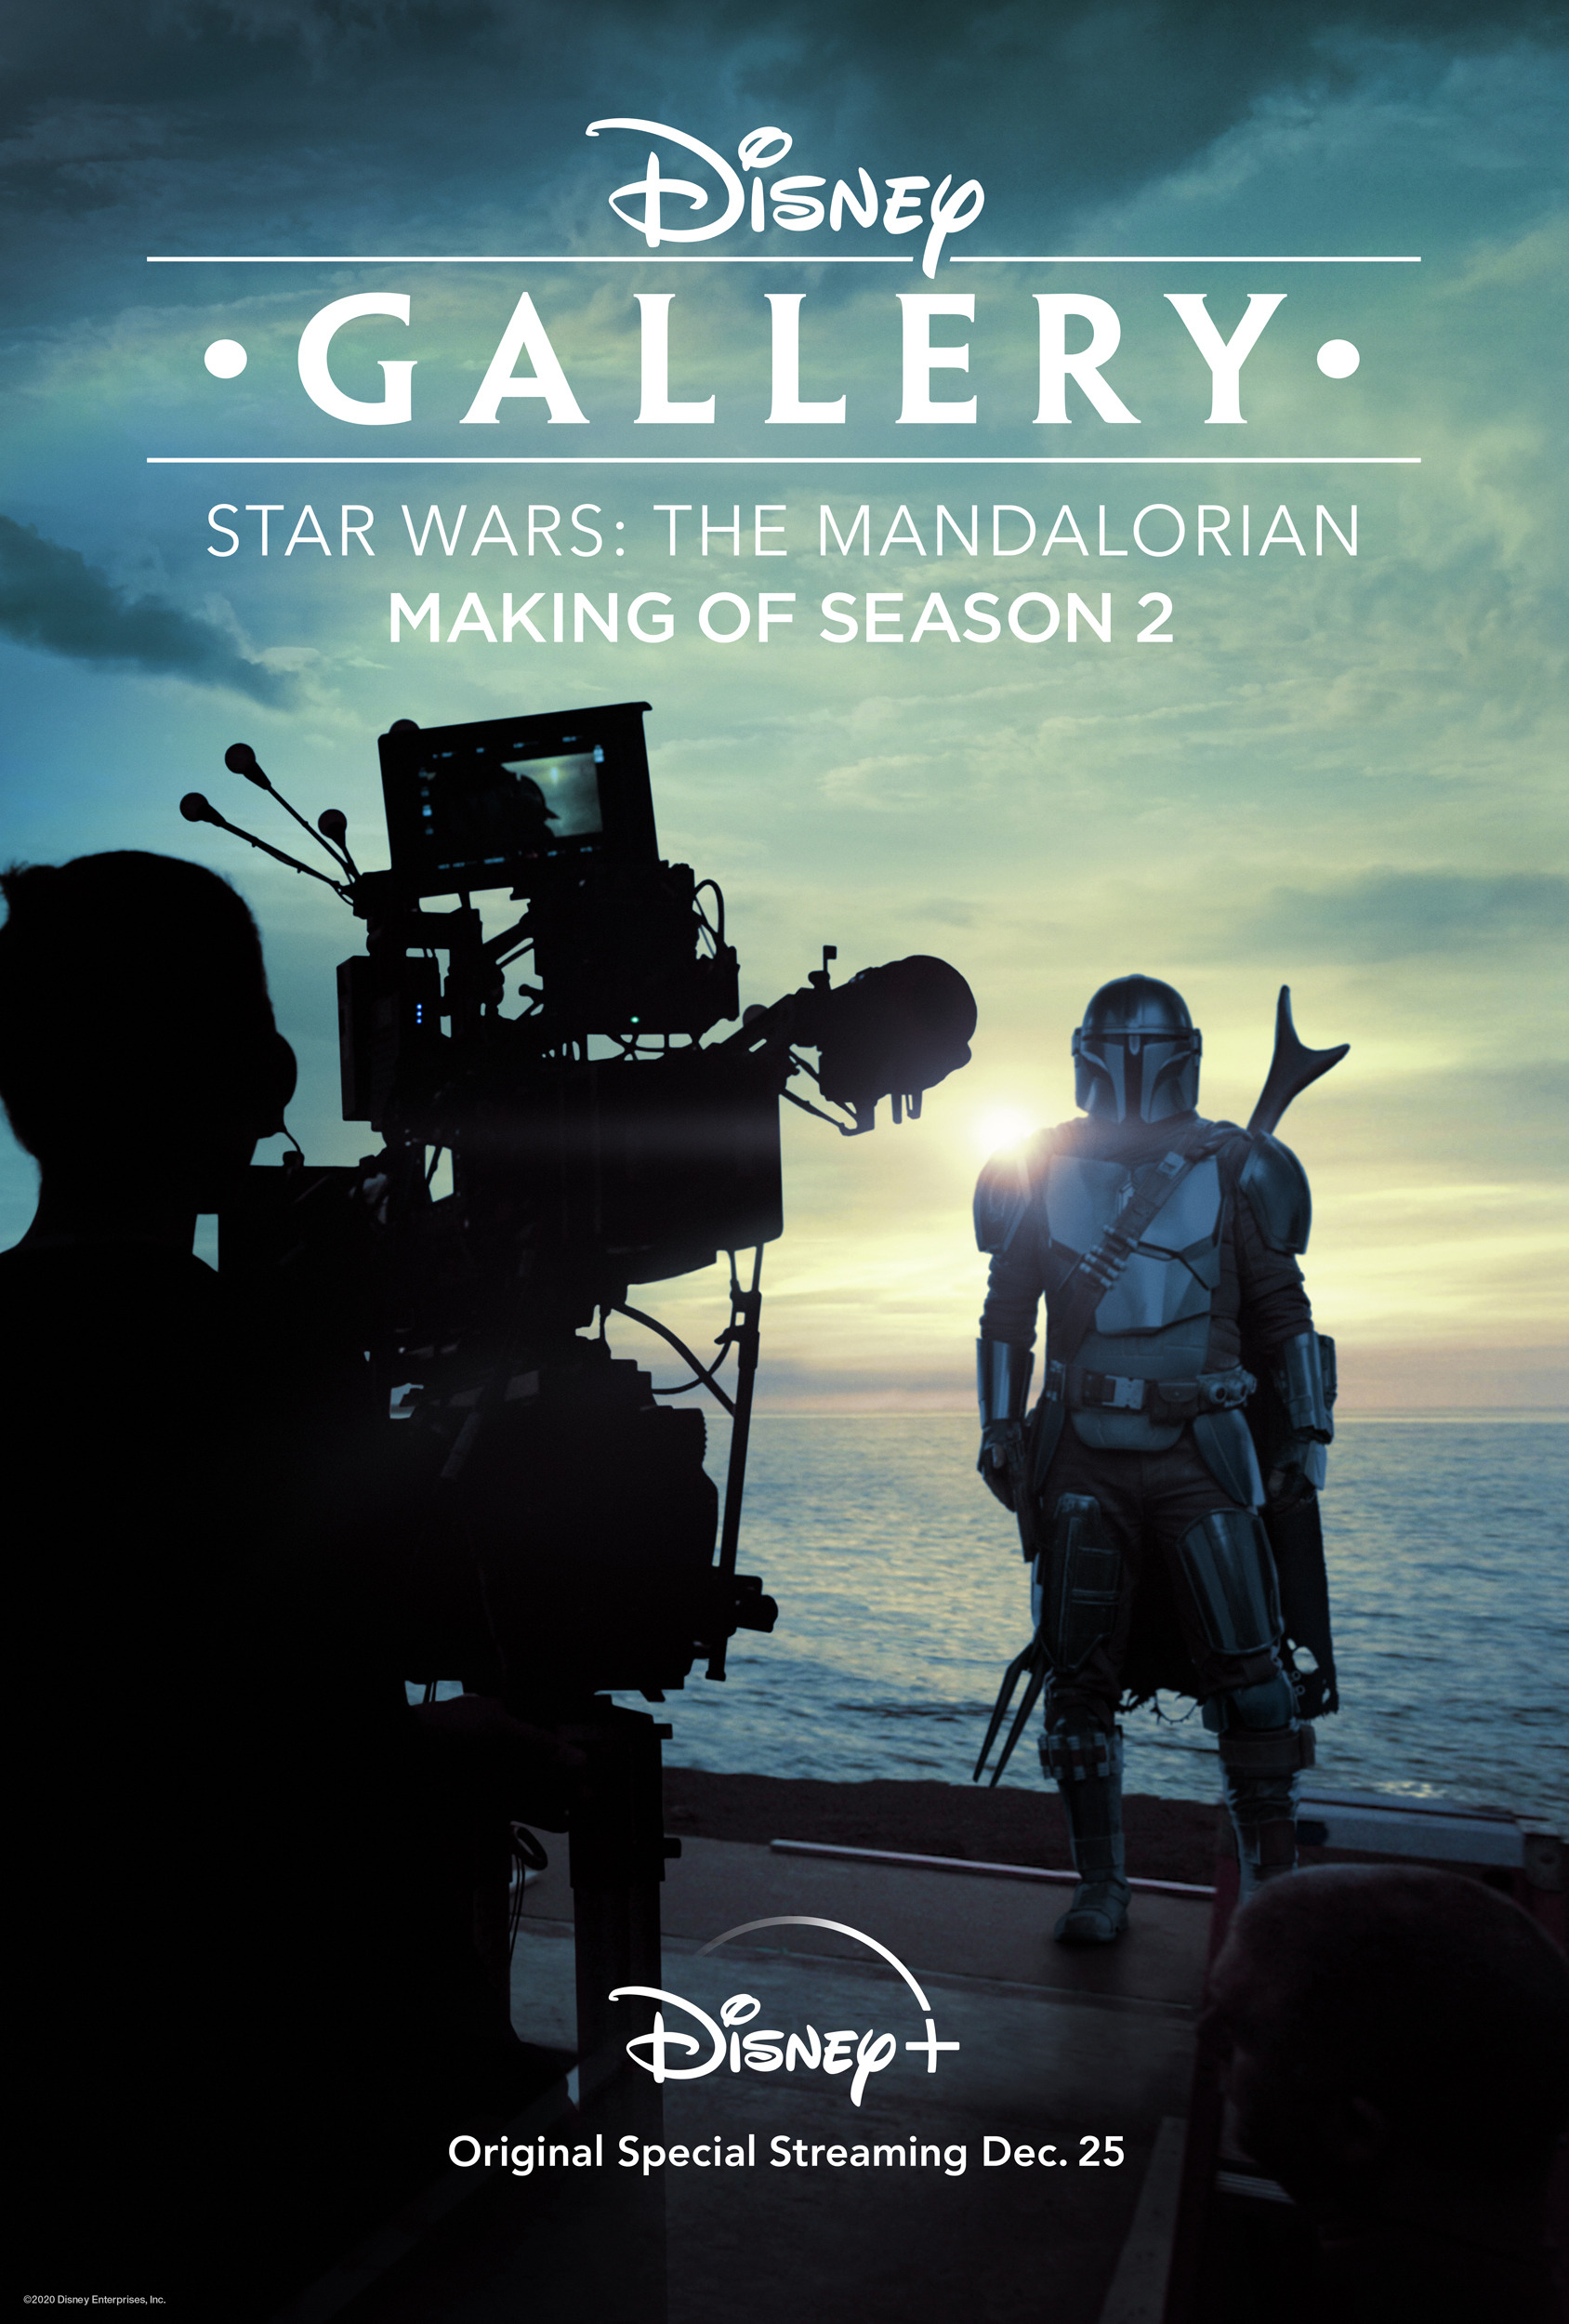 Mega Sized TV Poster Image for Disney Gallery: Star Wars: The Mandalorian (#2 of 2)